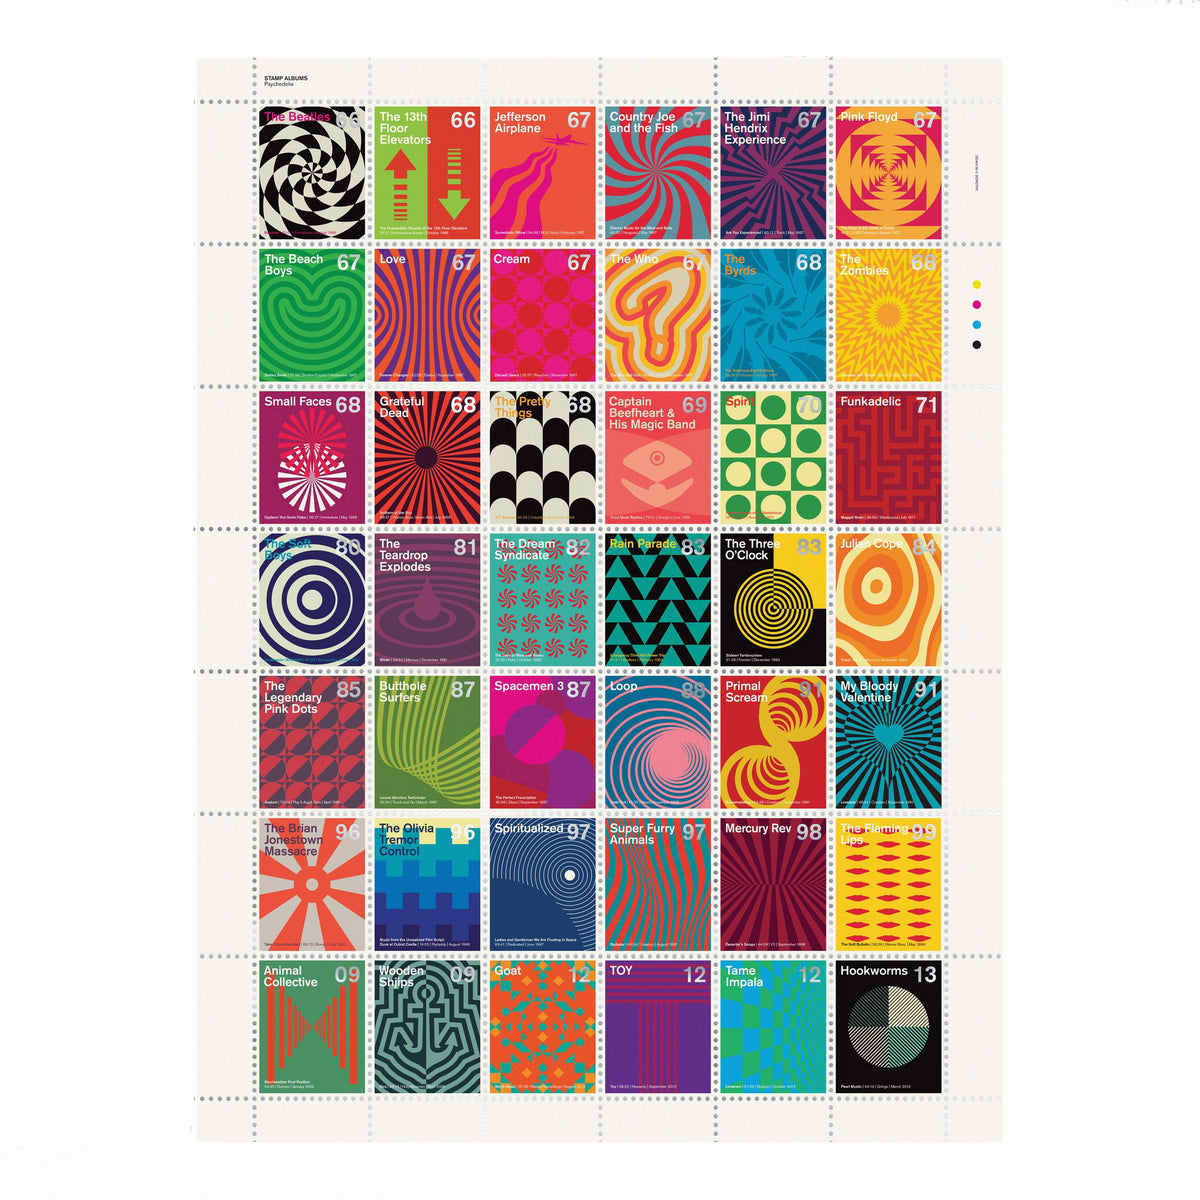 Alternative Stamp Album Poster Volume 2 Print